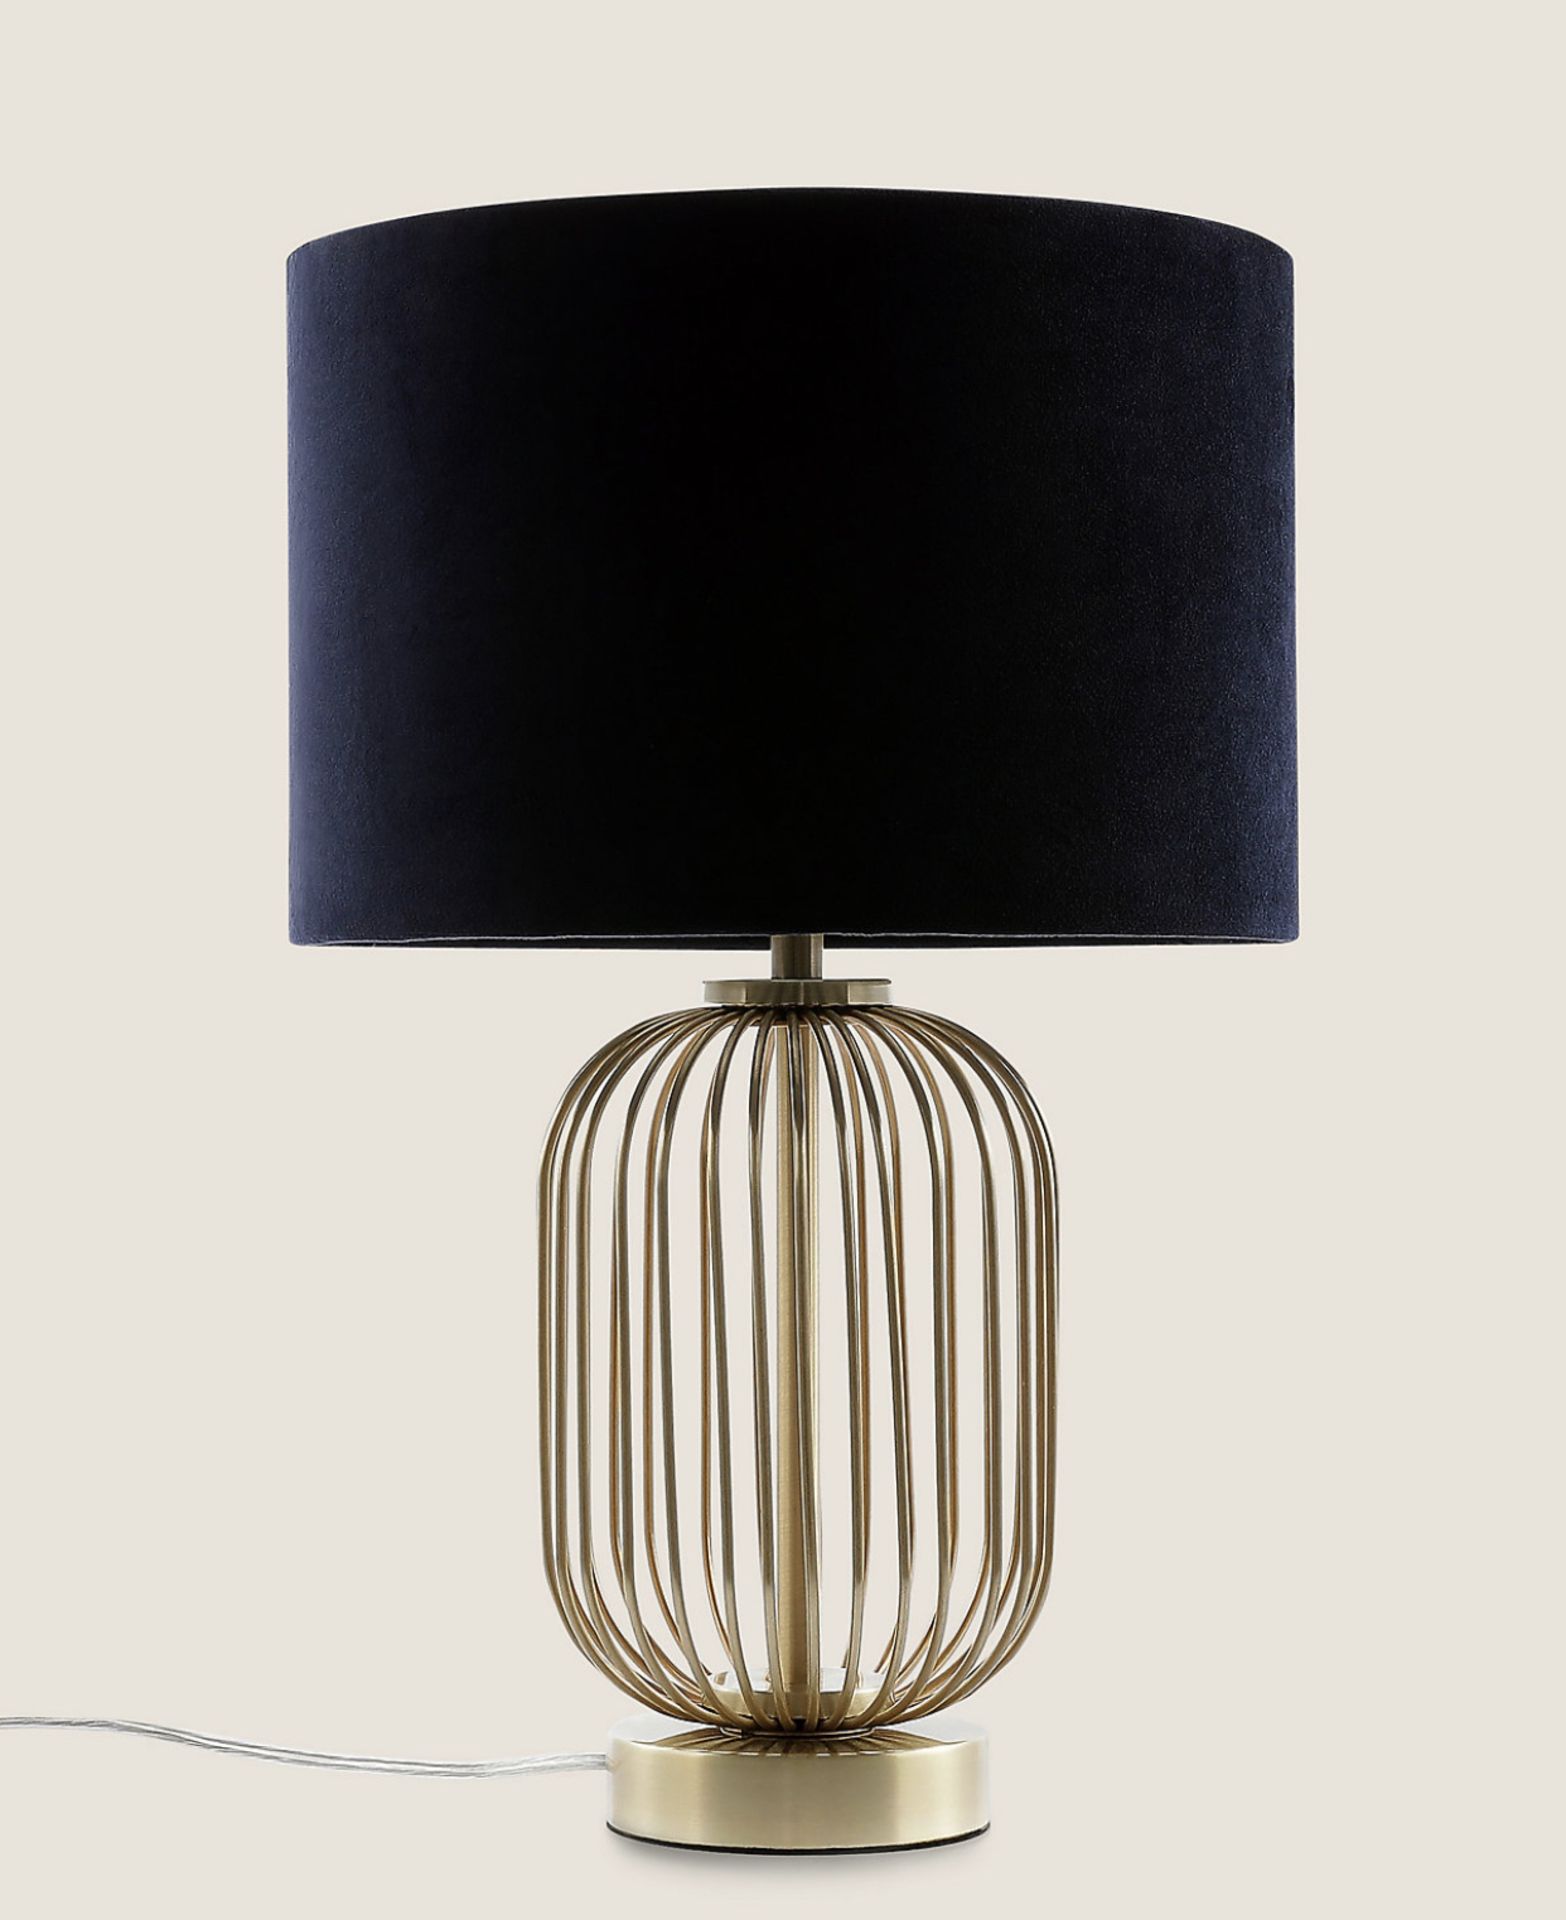 Stylish Madrid Table Lamp RRP £49.50